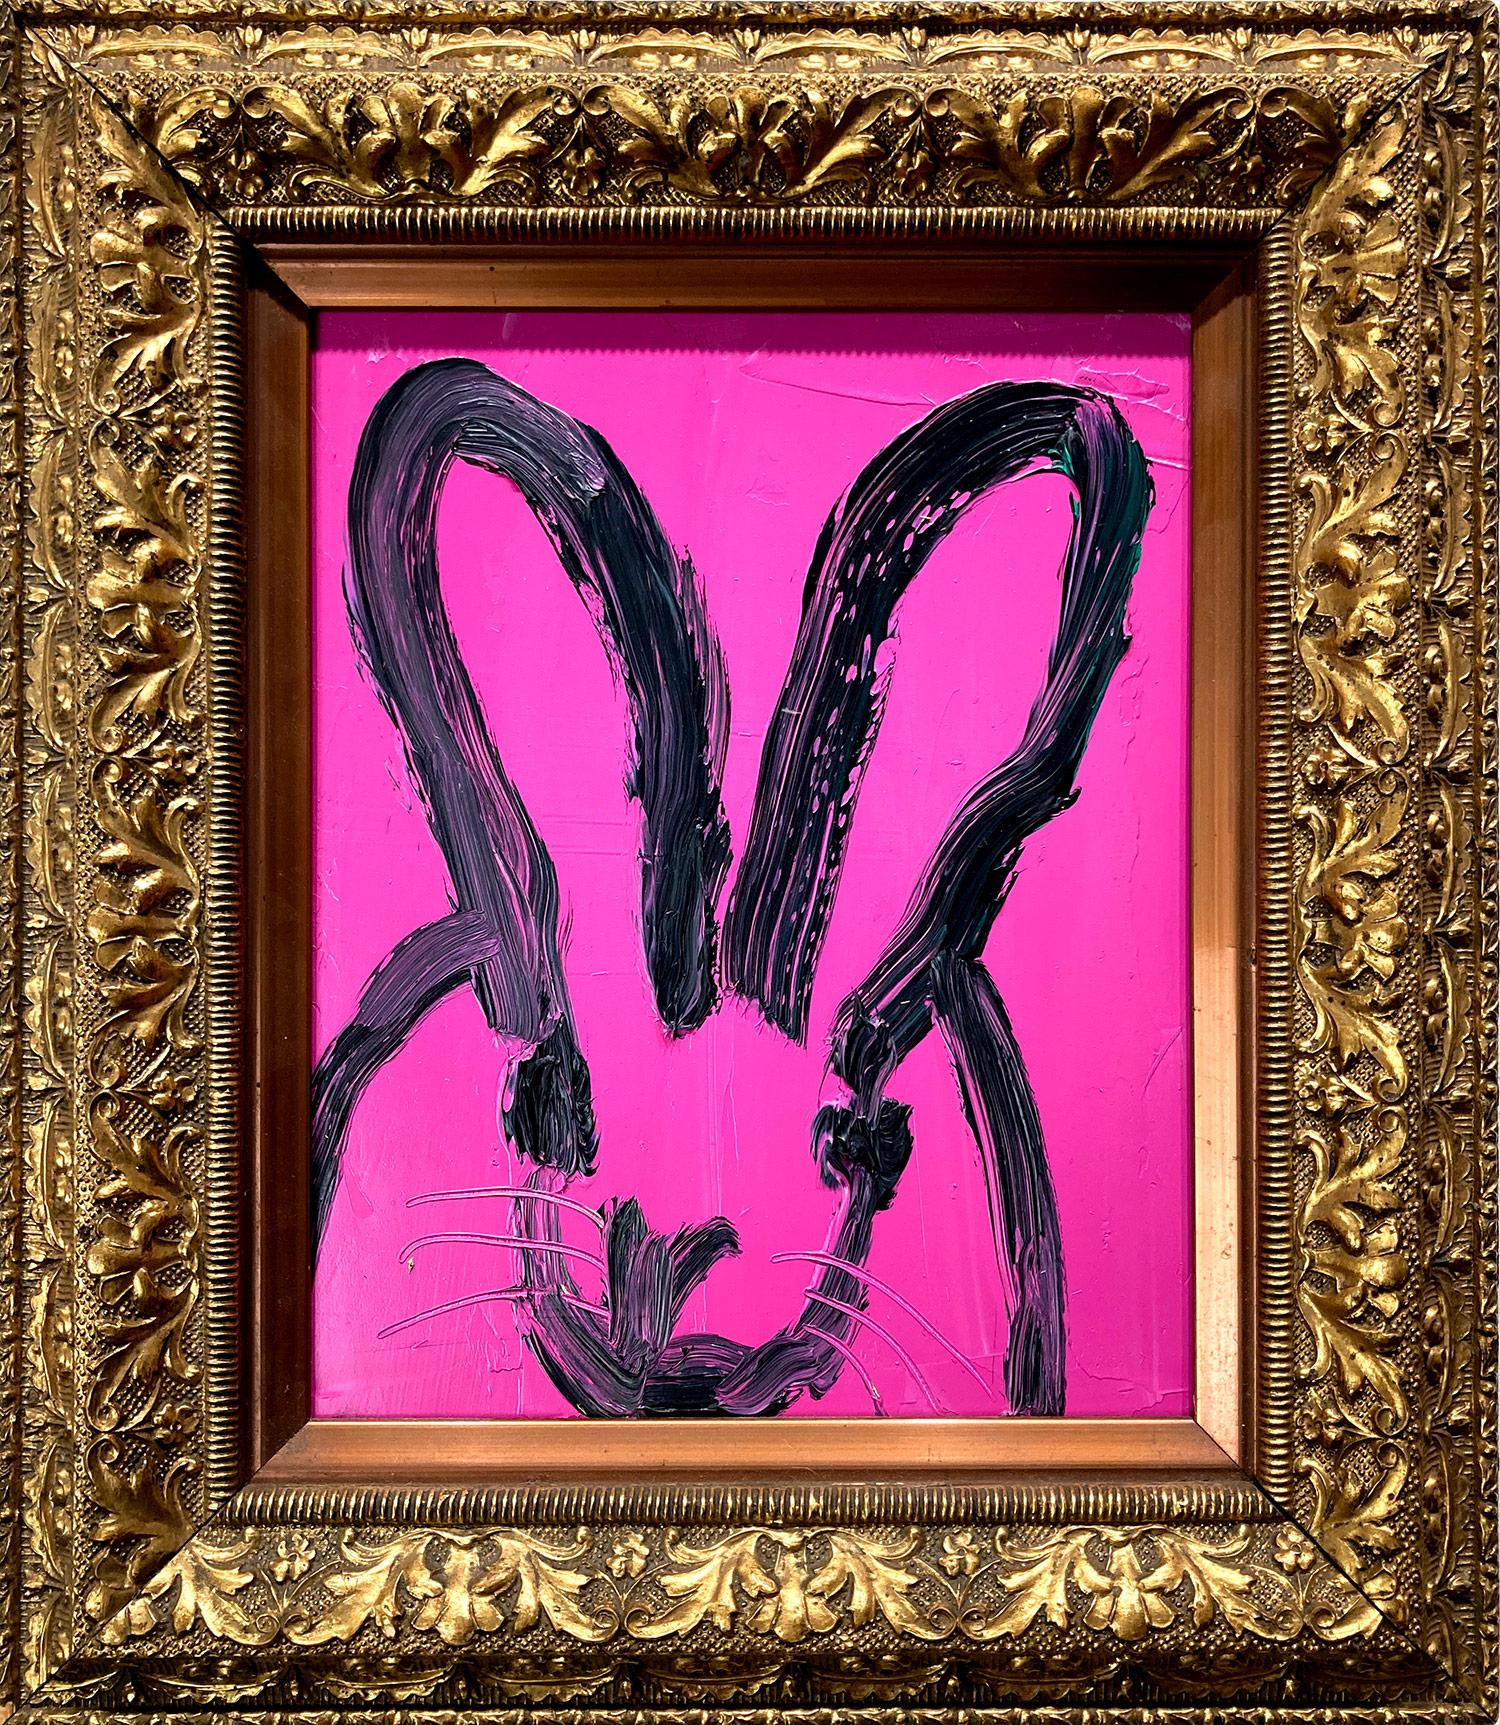 Hunt Slonem Animal Painting - "Anushka" Black Bunny on Hot Pink Background Oil Painting on Wood Panel